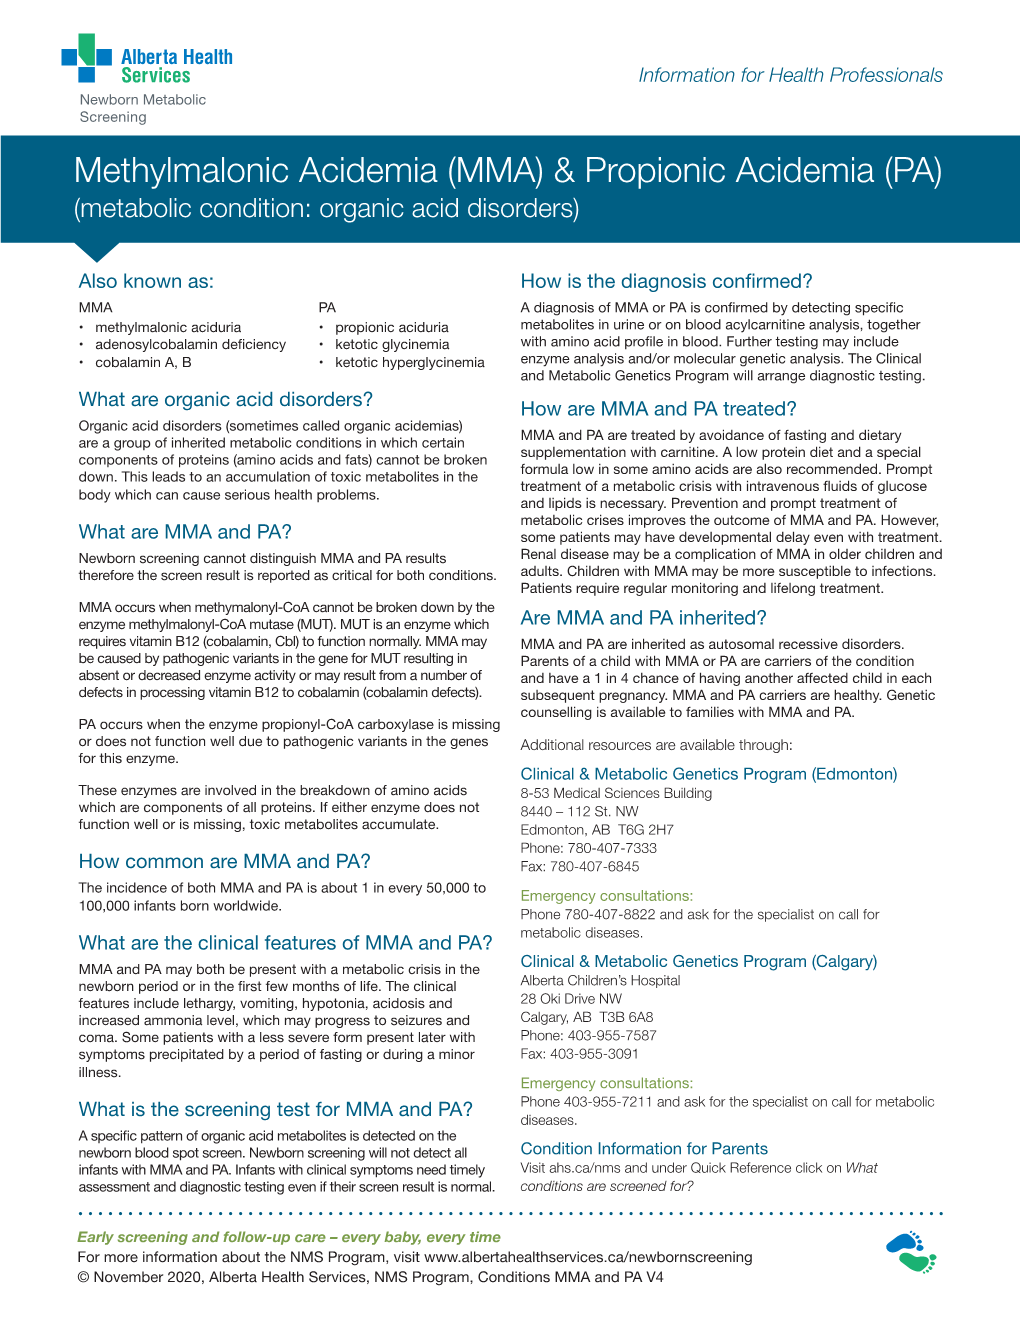 Methylmalonic Acidemic (MMA) & Propionic Acidemia (PA)